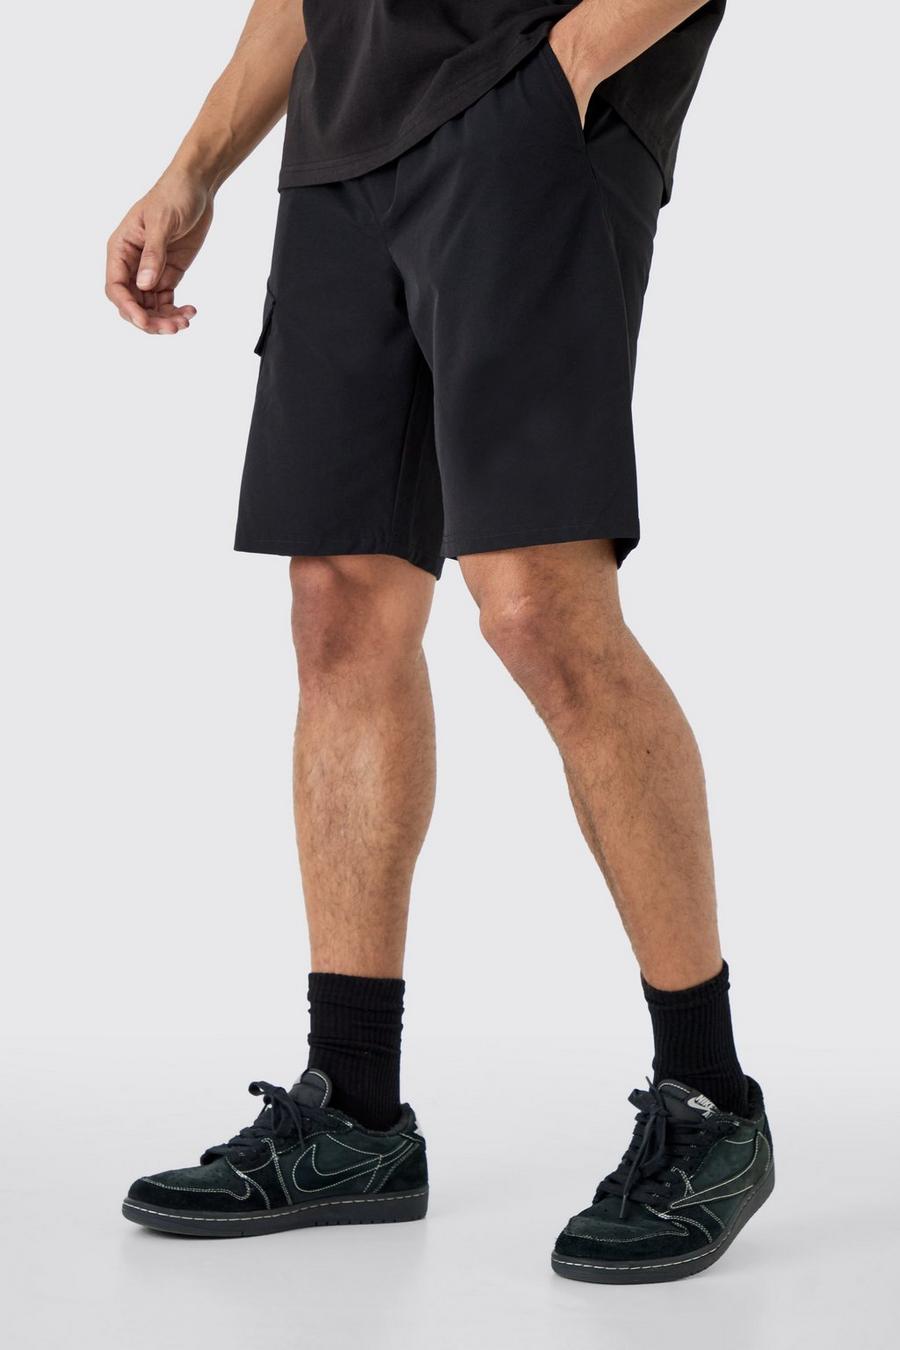 Black Elastische Comfortabele Dunne Stretch Shorts